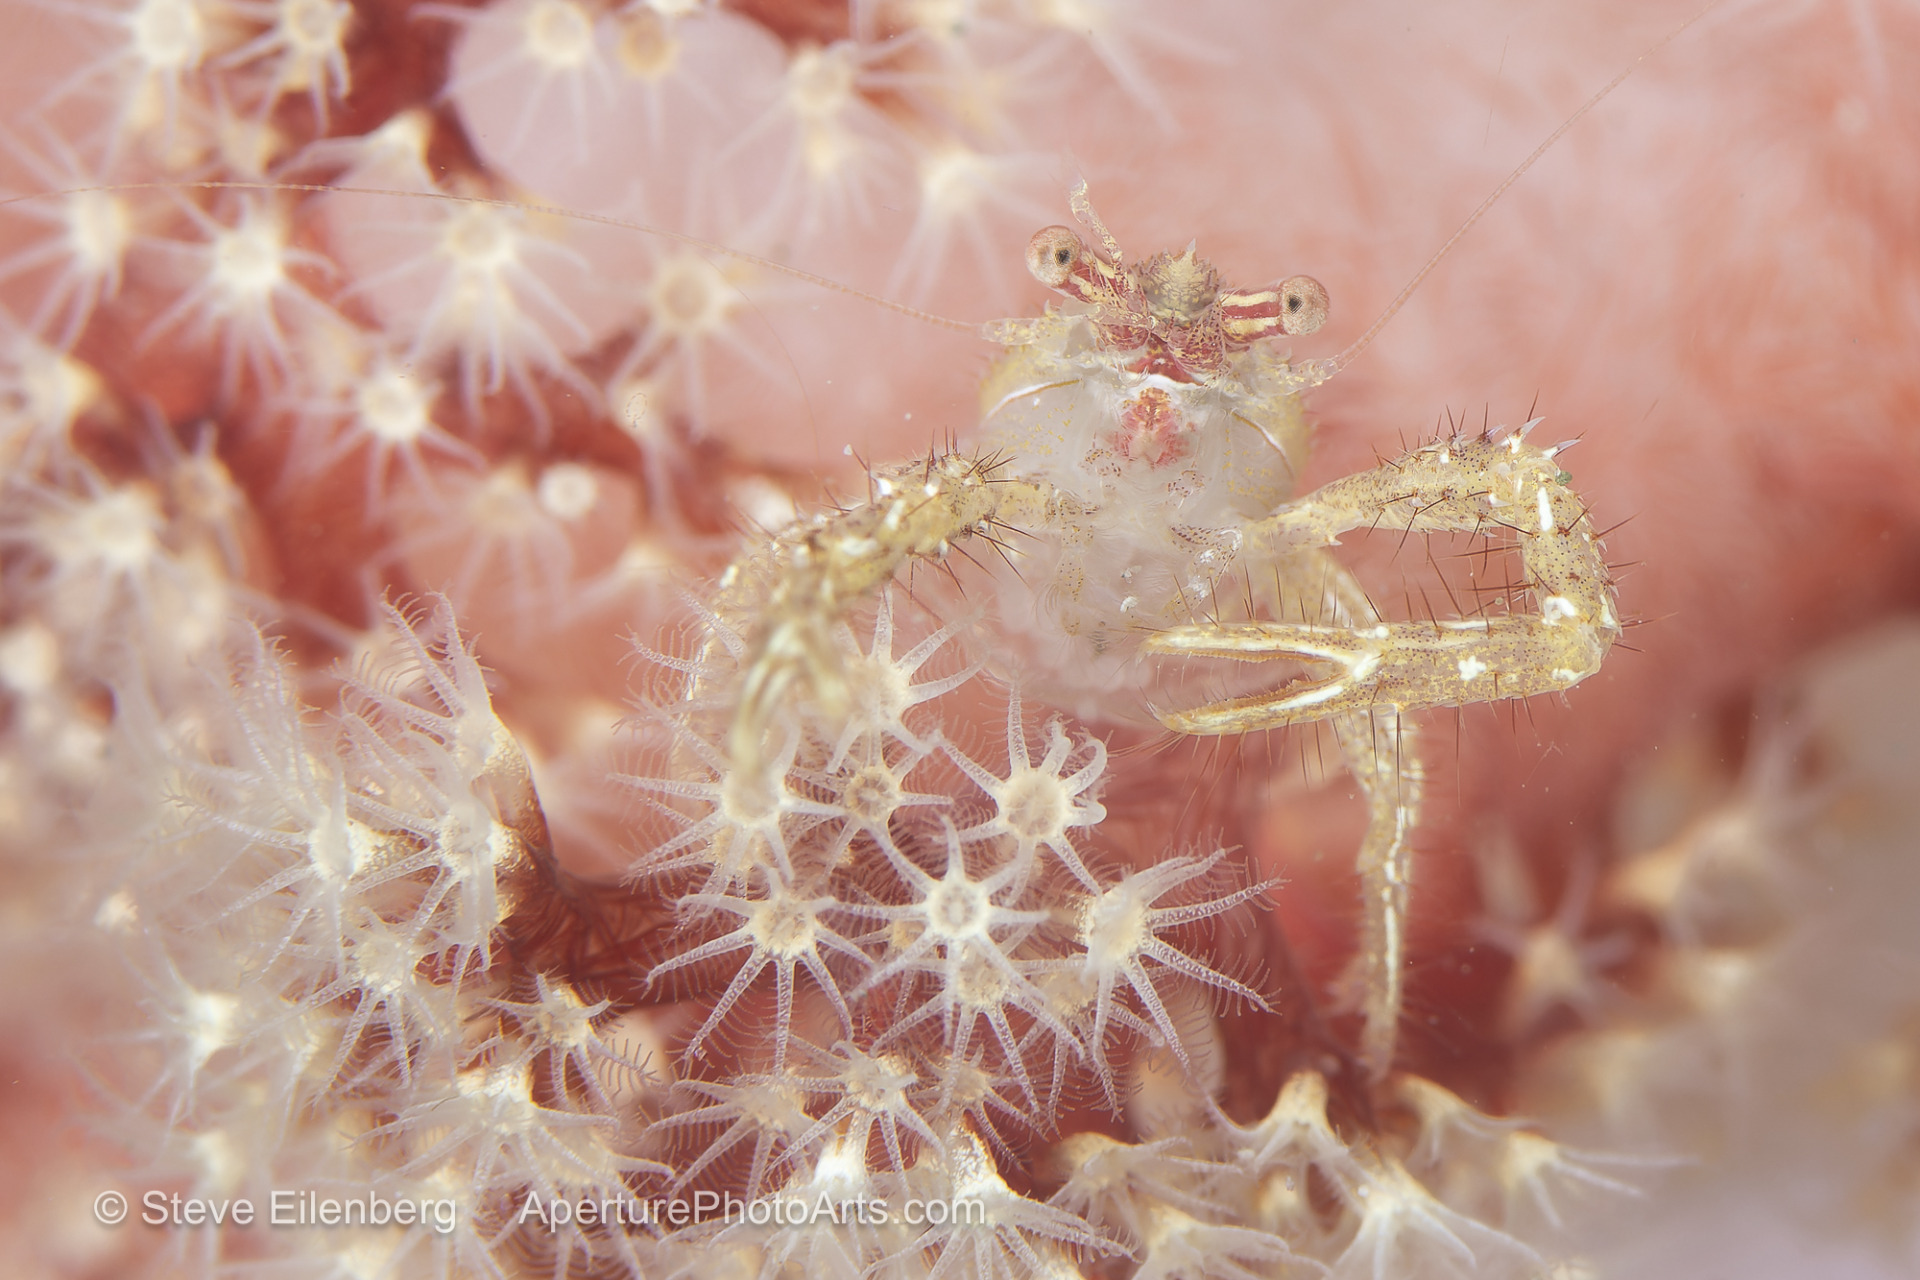 Soft coral crab posing